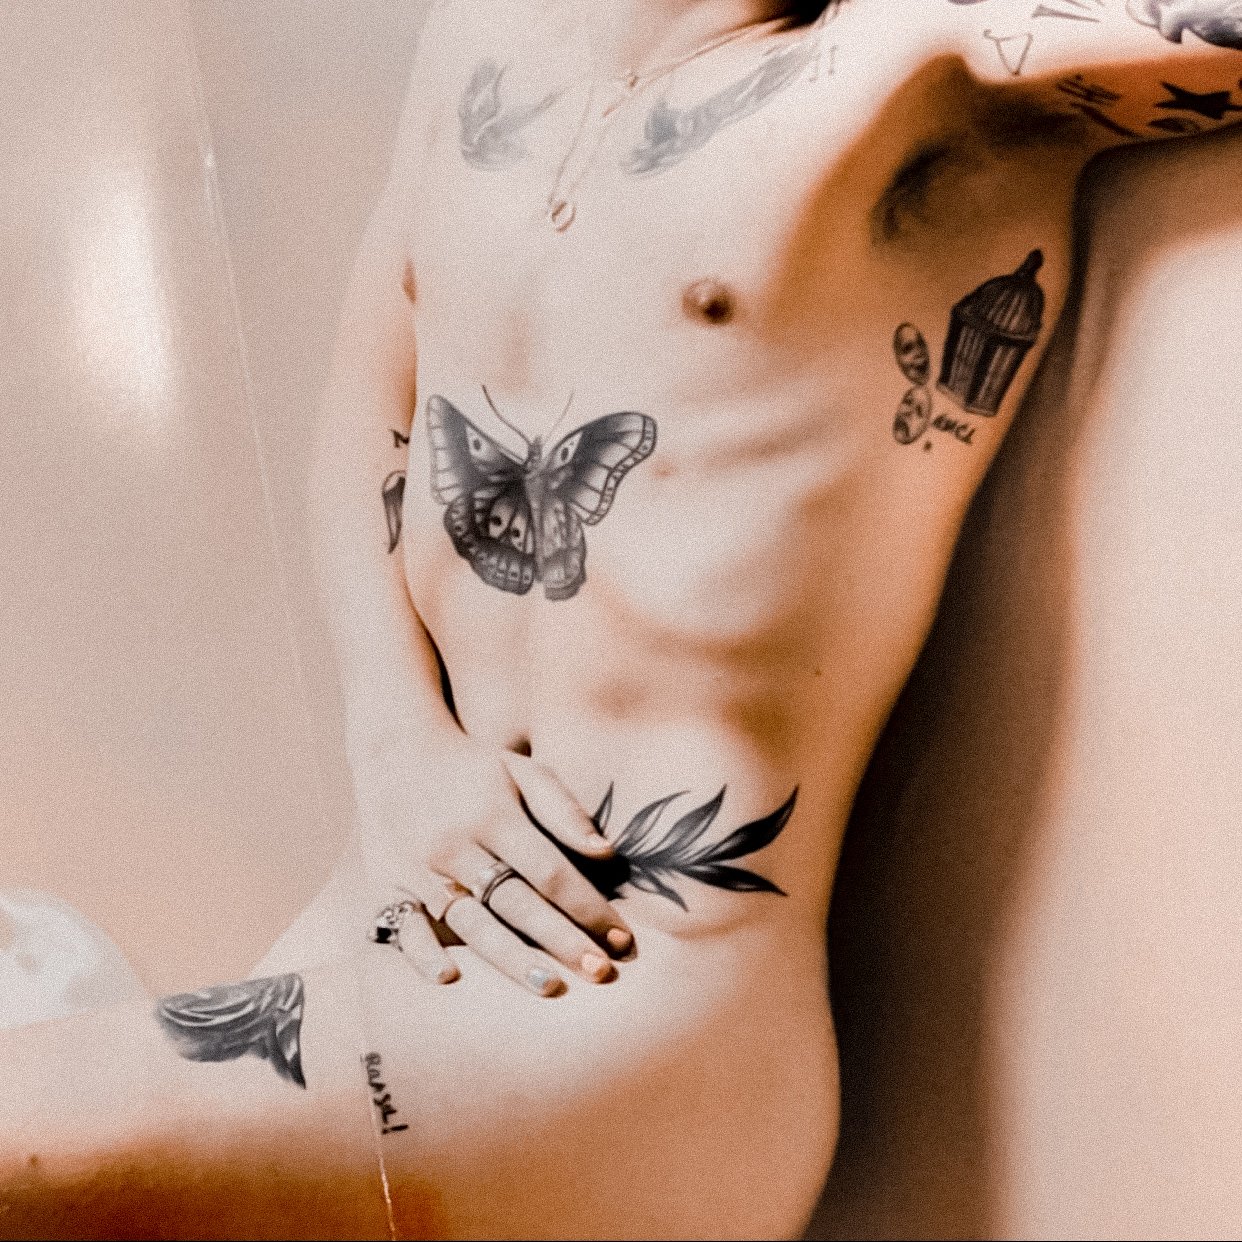 Harry Styles nude photos